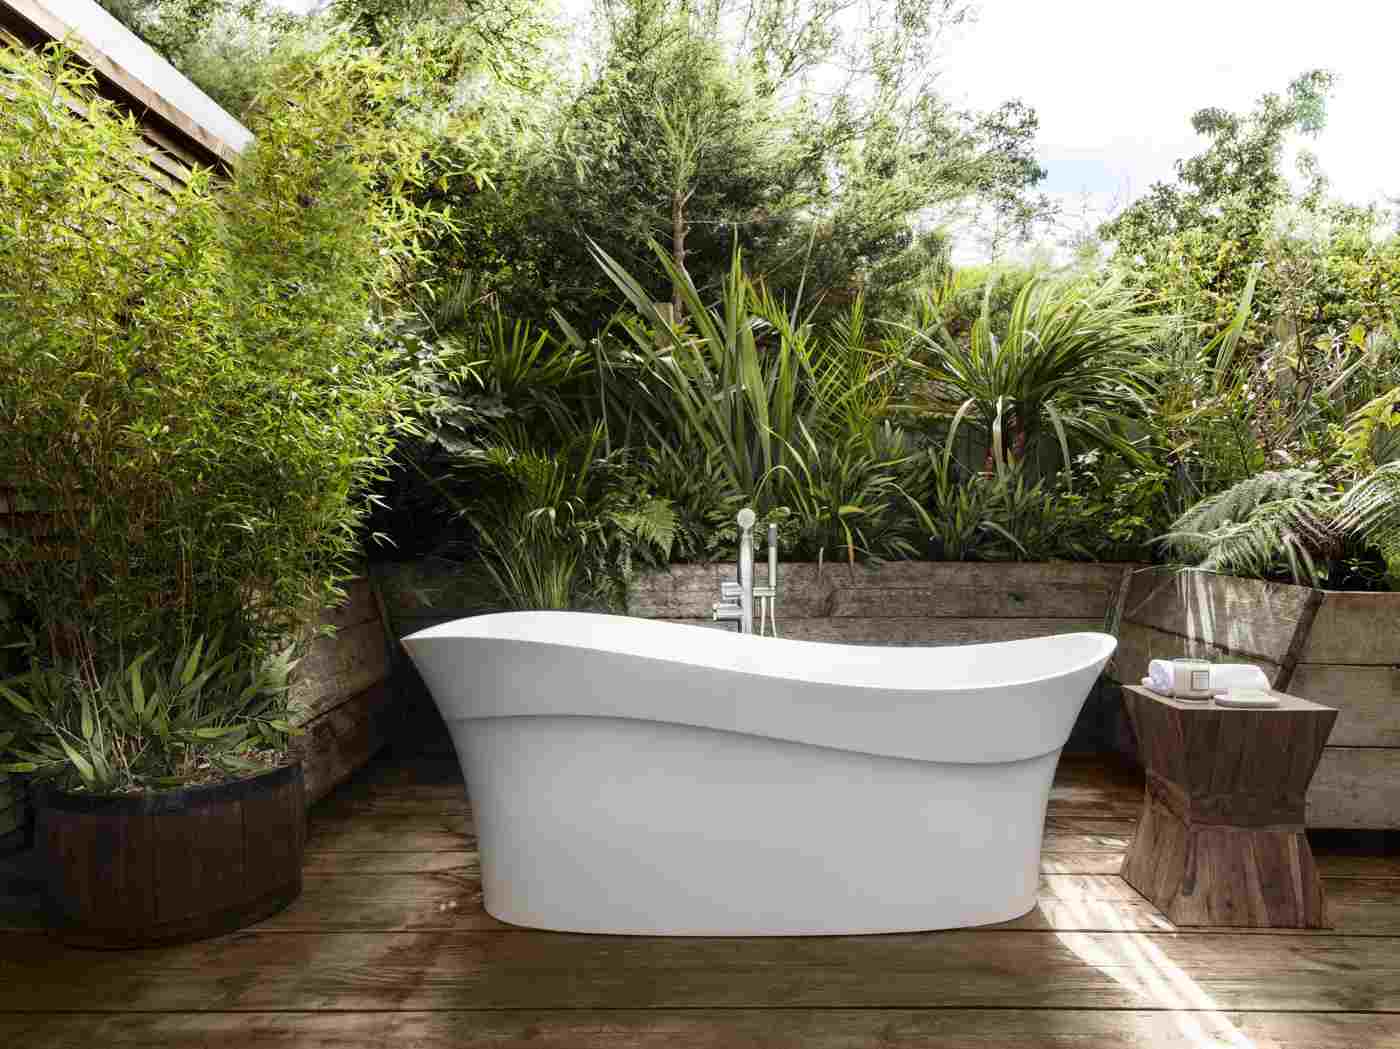 Bathtub in garden Garden chair Terrace Wood high green perennials